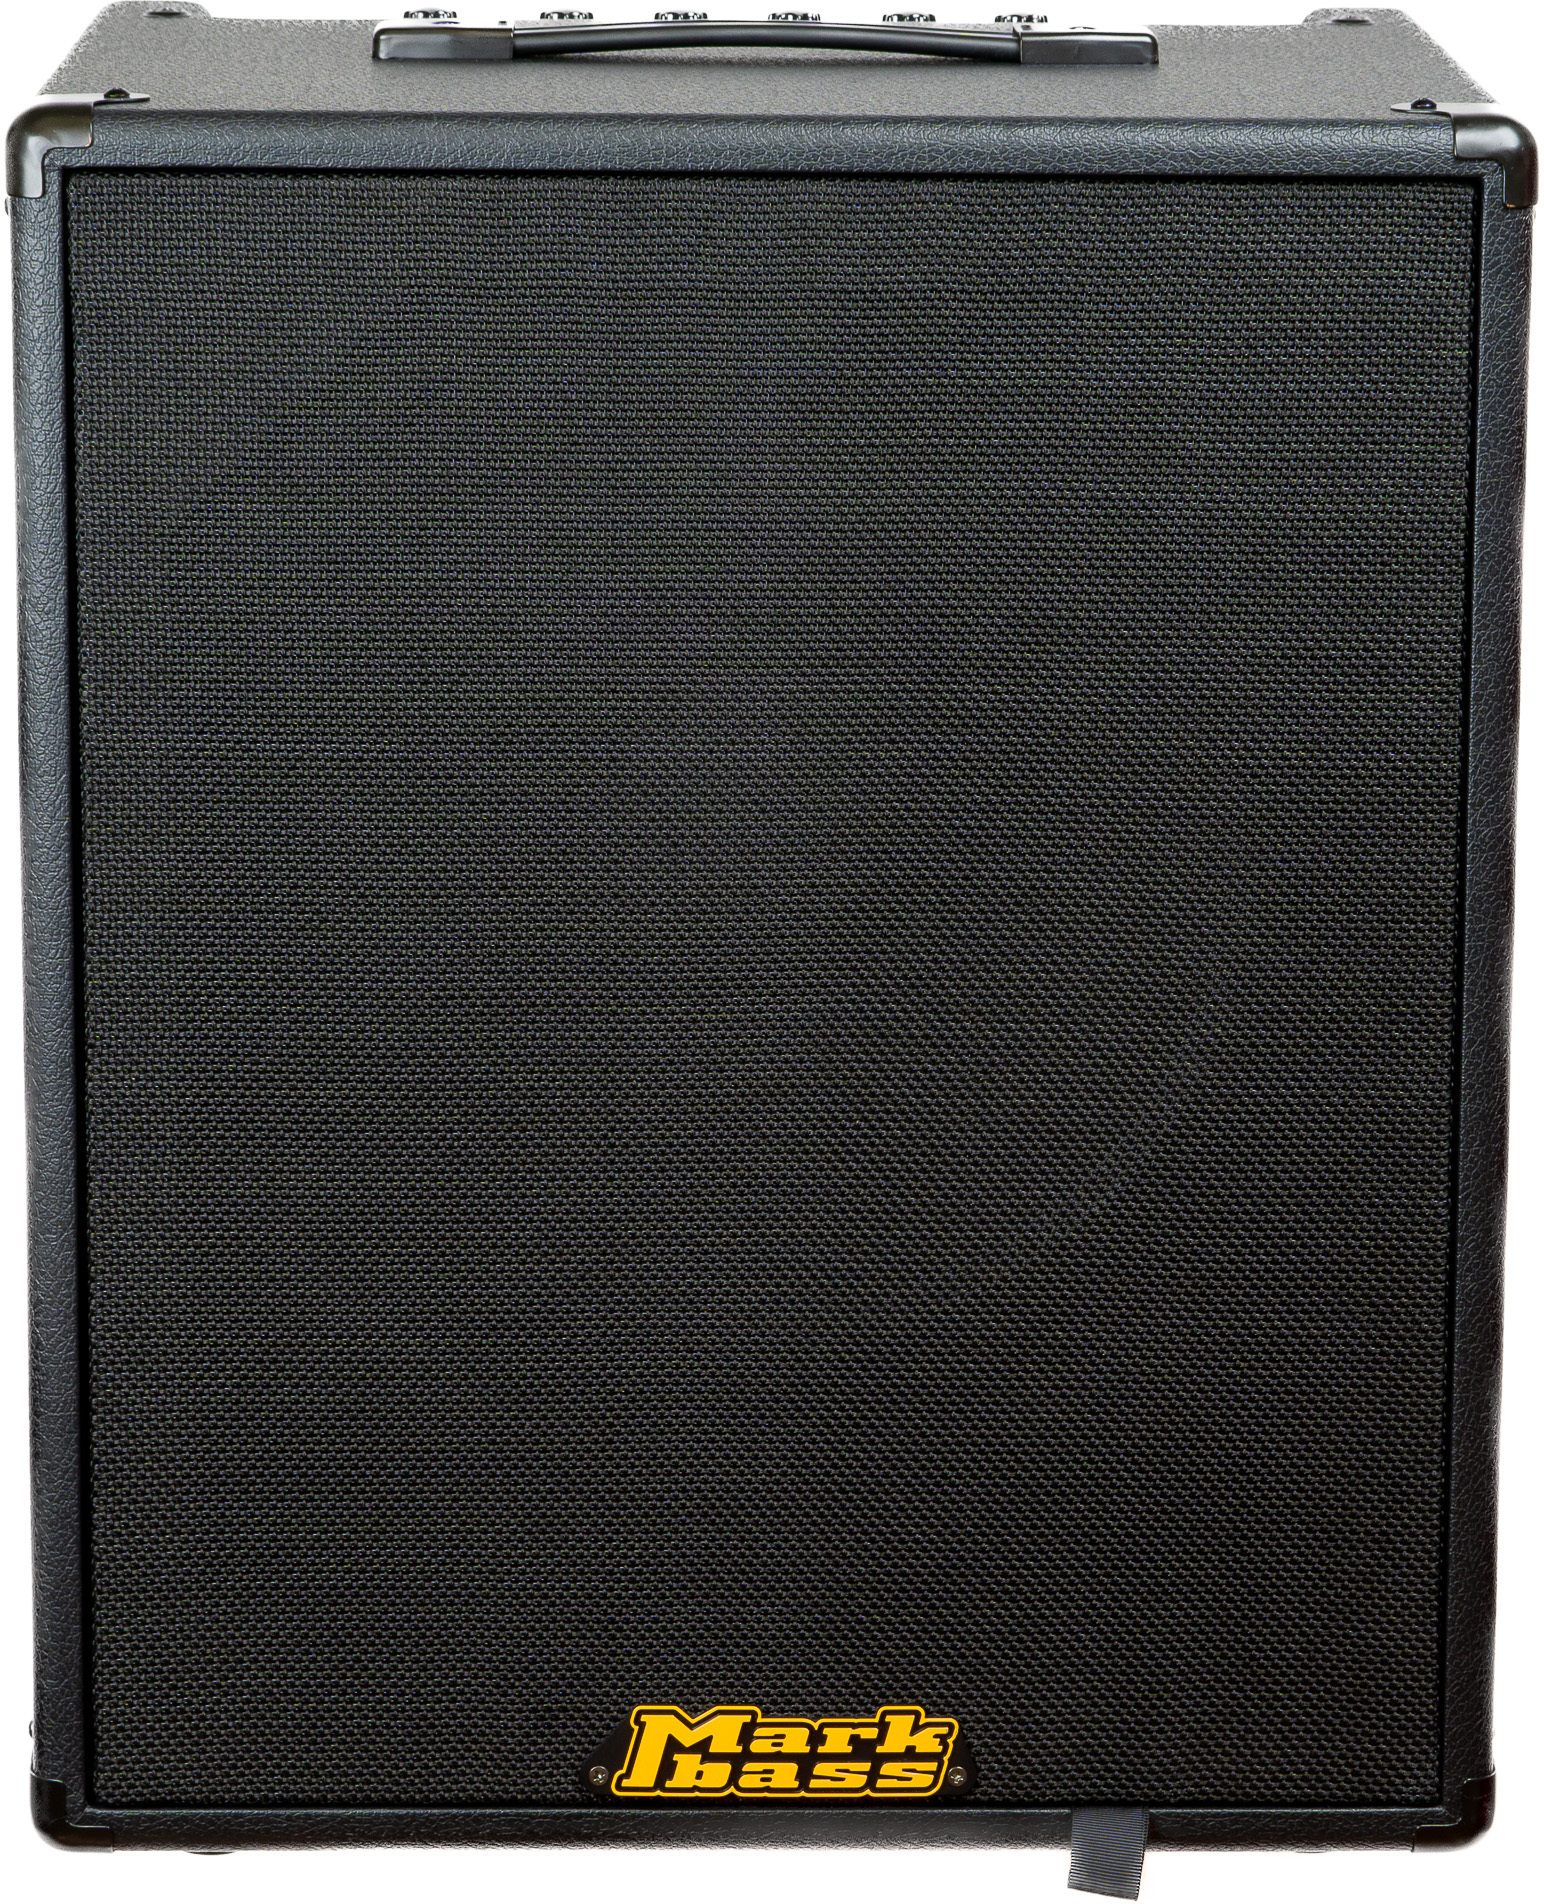 Markbass Cmb 151 Black Line 150w 1x15 - Combo amplificador para bajo - Main picture